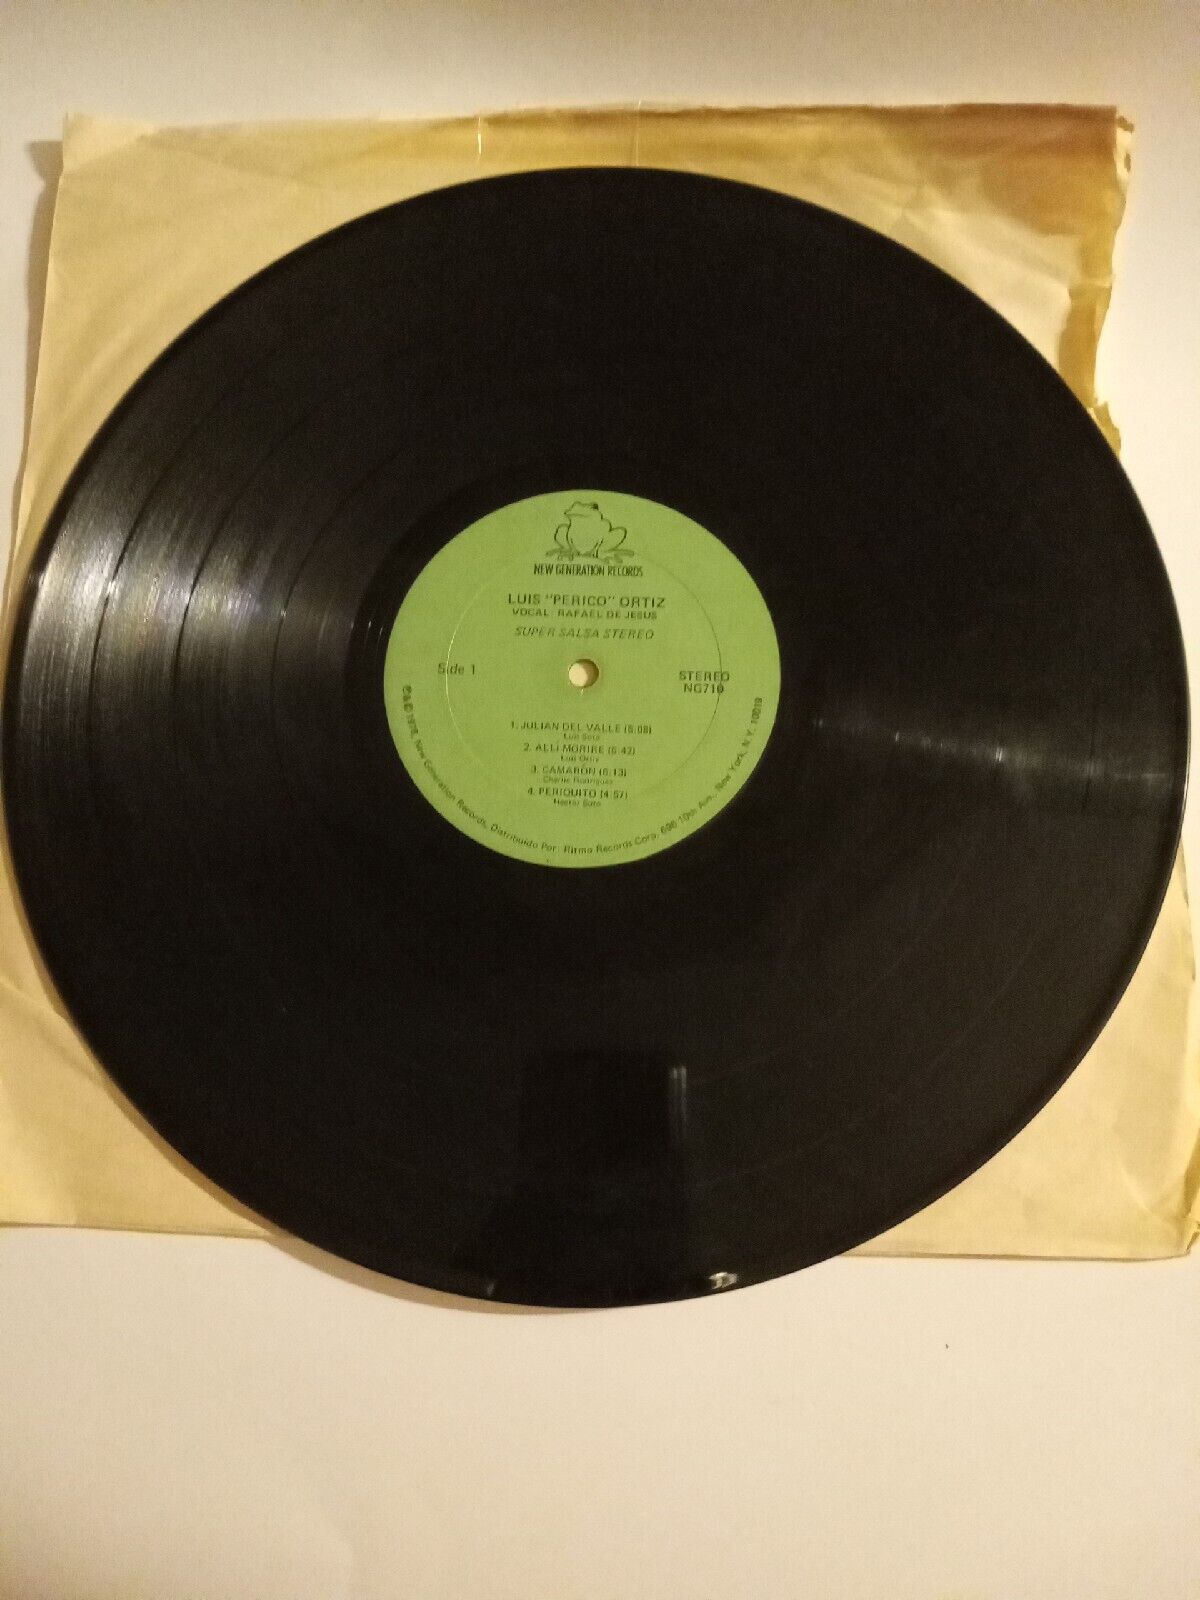 LUIS PERICO ORTIZ SUPER SALSA LP RECORD, NO CARDBOARD SLEEVE OR LINING.